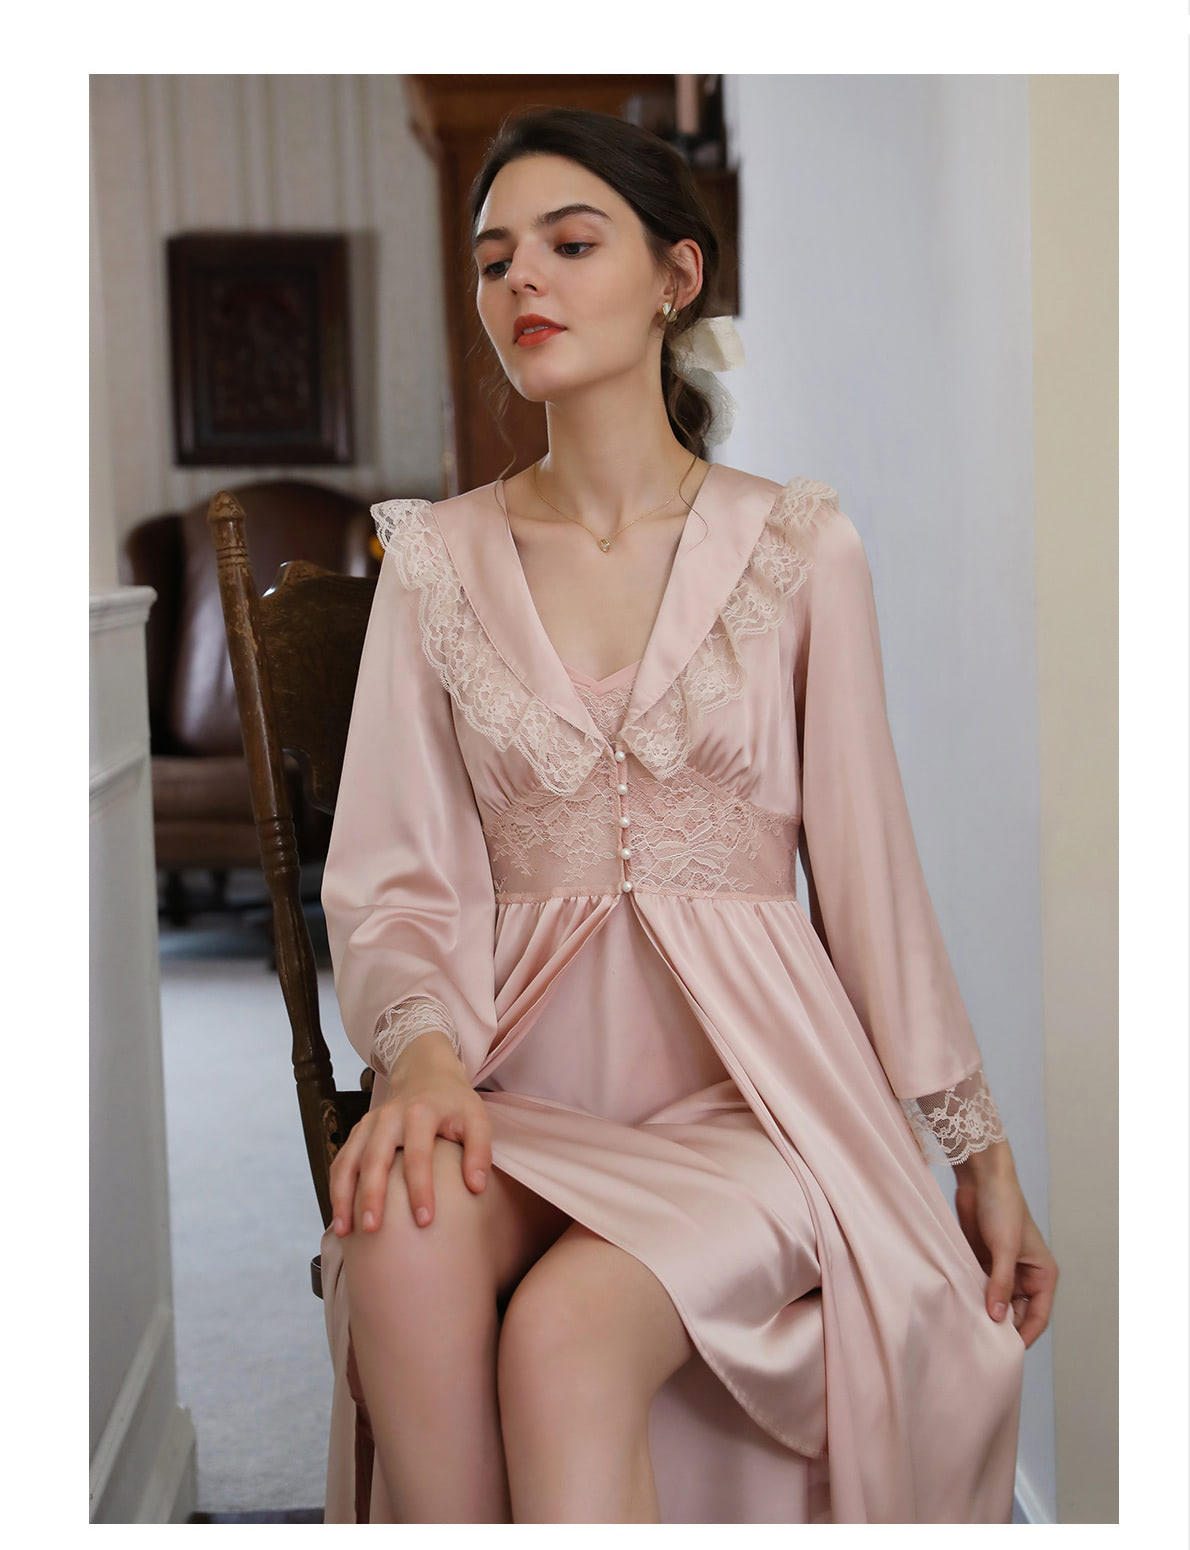 Vintage-Lace-Slip-Dress-Satin-Robe-Sleepwear-Home-Casual-Outift10.jpg